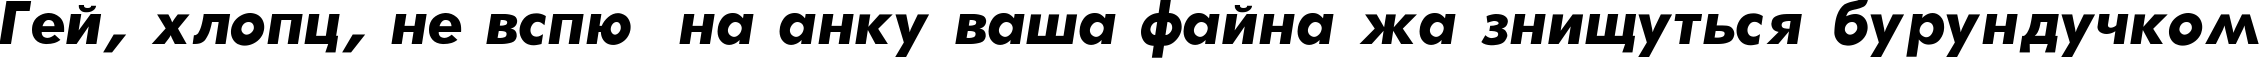 Пример написания шрифтом Futura-Bold-Italic текста на украинском